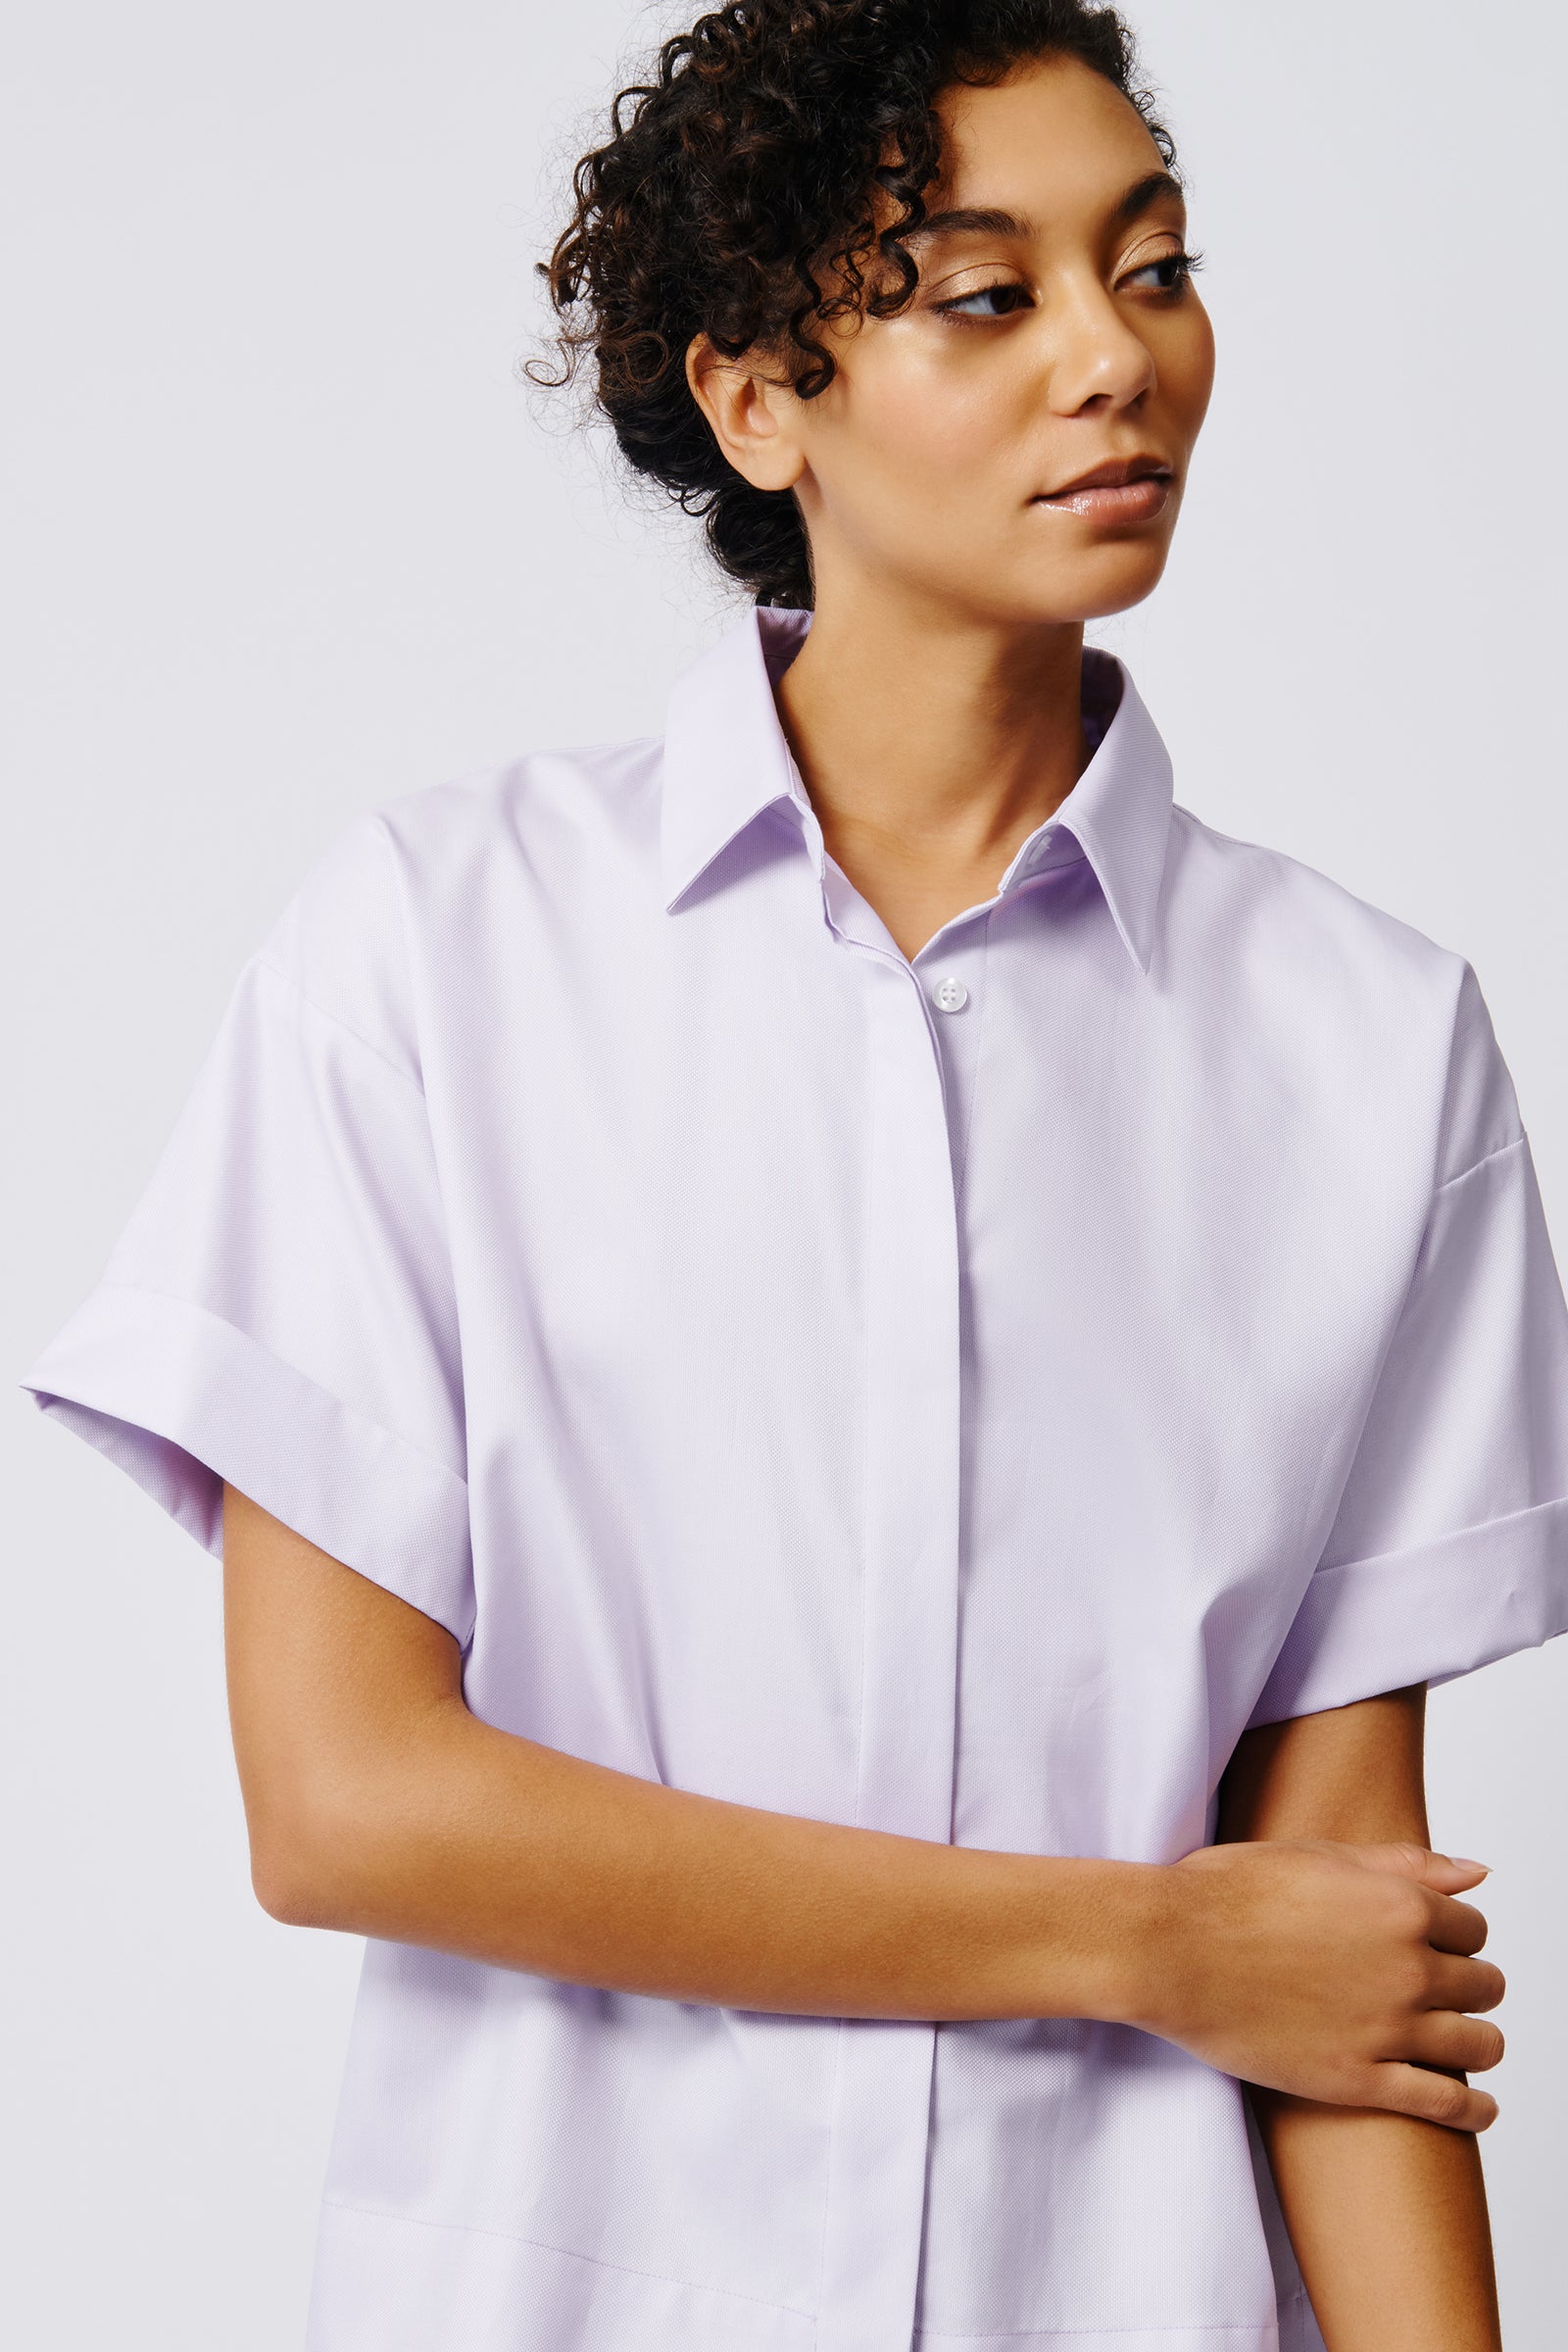 Kal Rieman Billie Cuffed Short Sleeve Shirt in Lavender on Model Side View Closeup